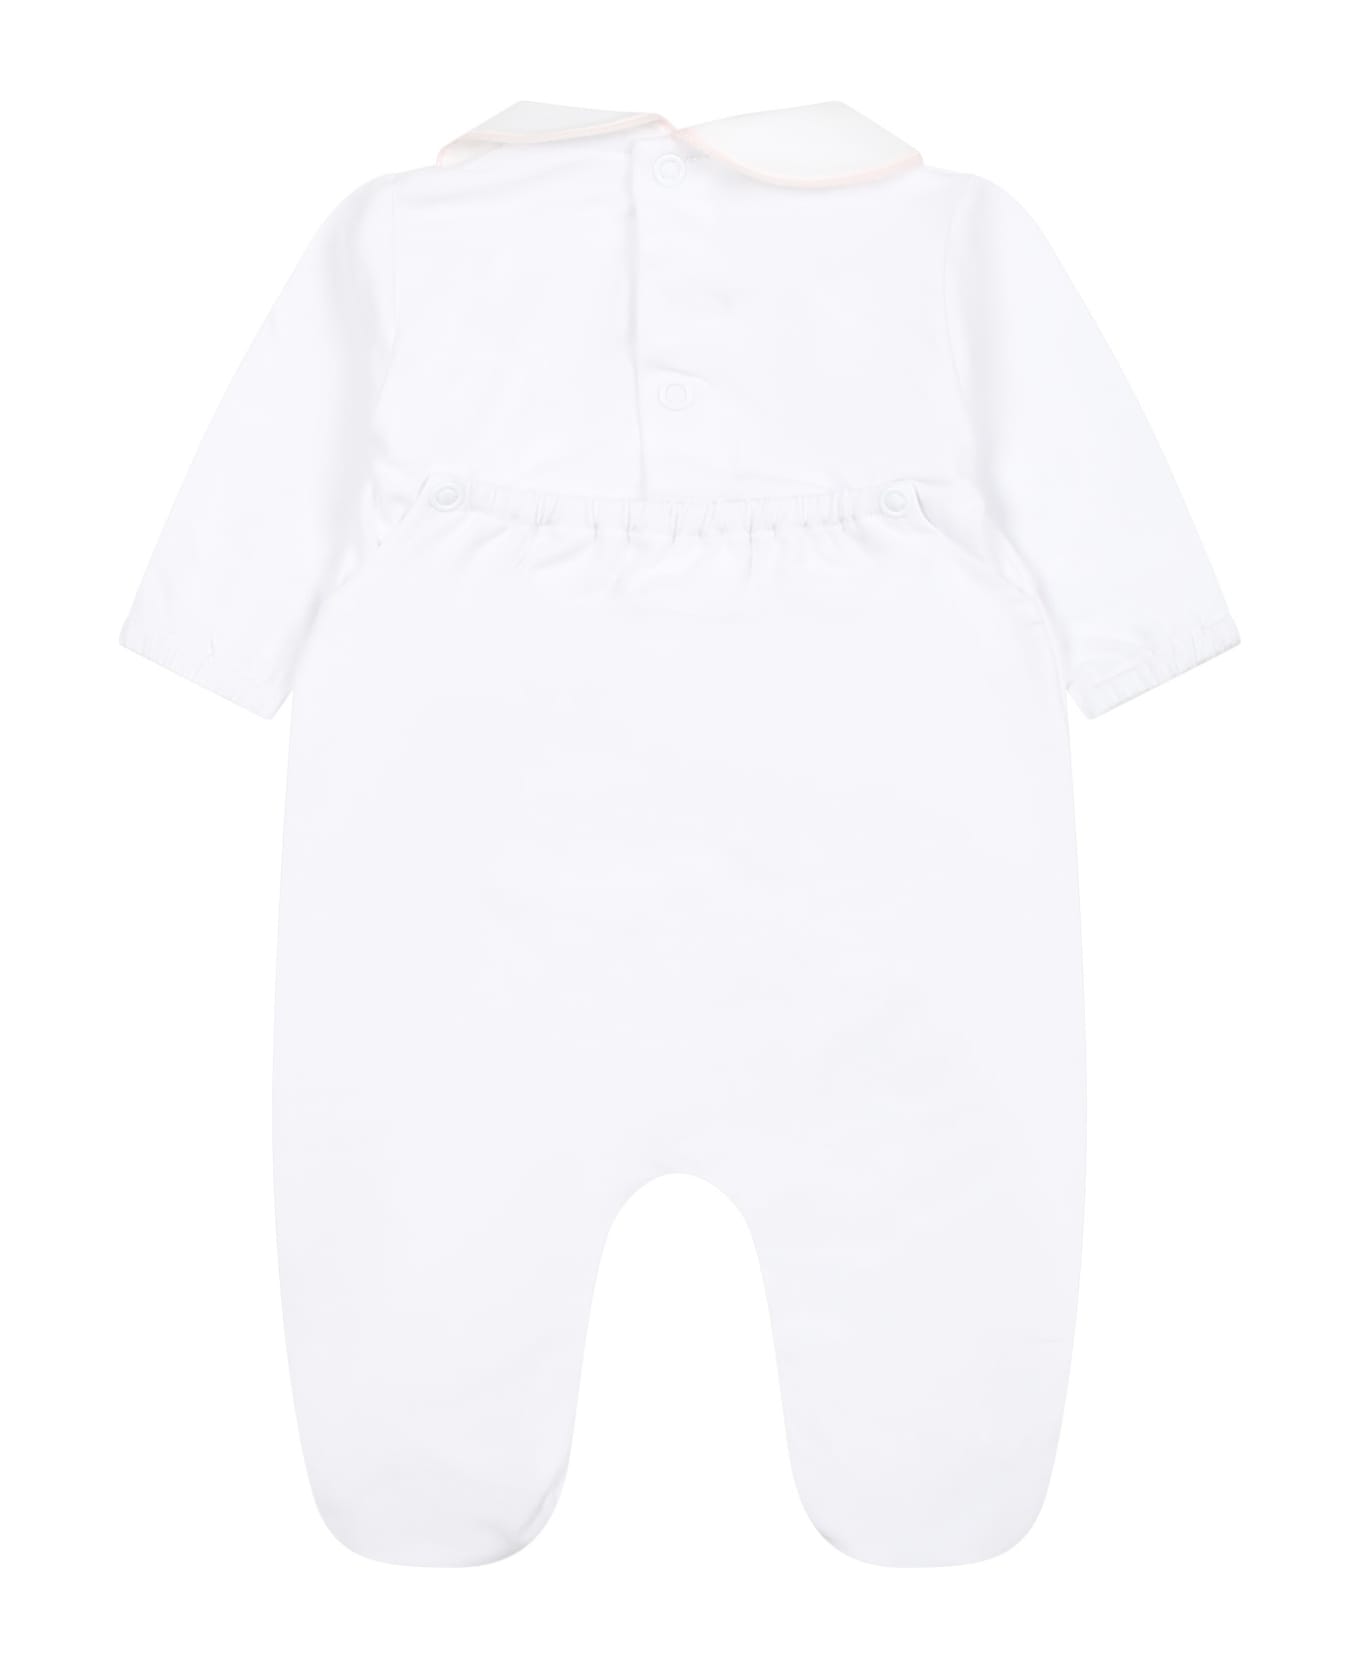 Little Bear White Babygrown For Baby Girl With Polka Dots - White